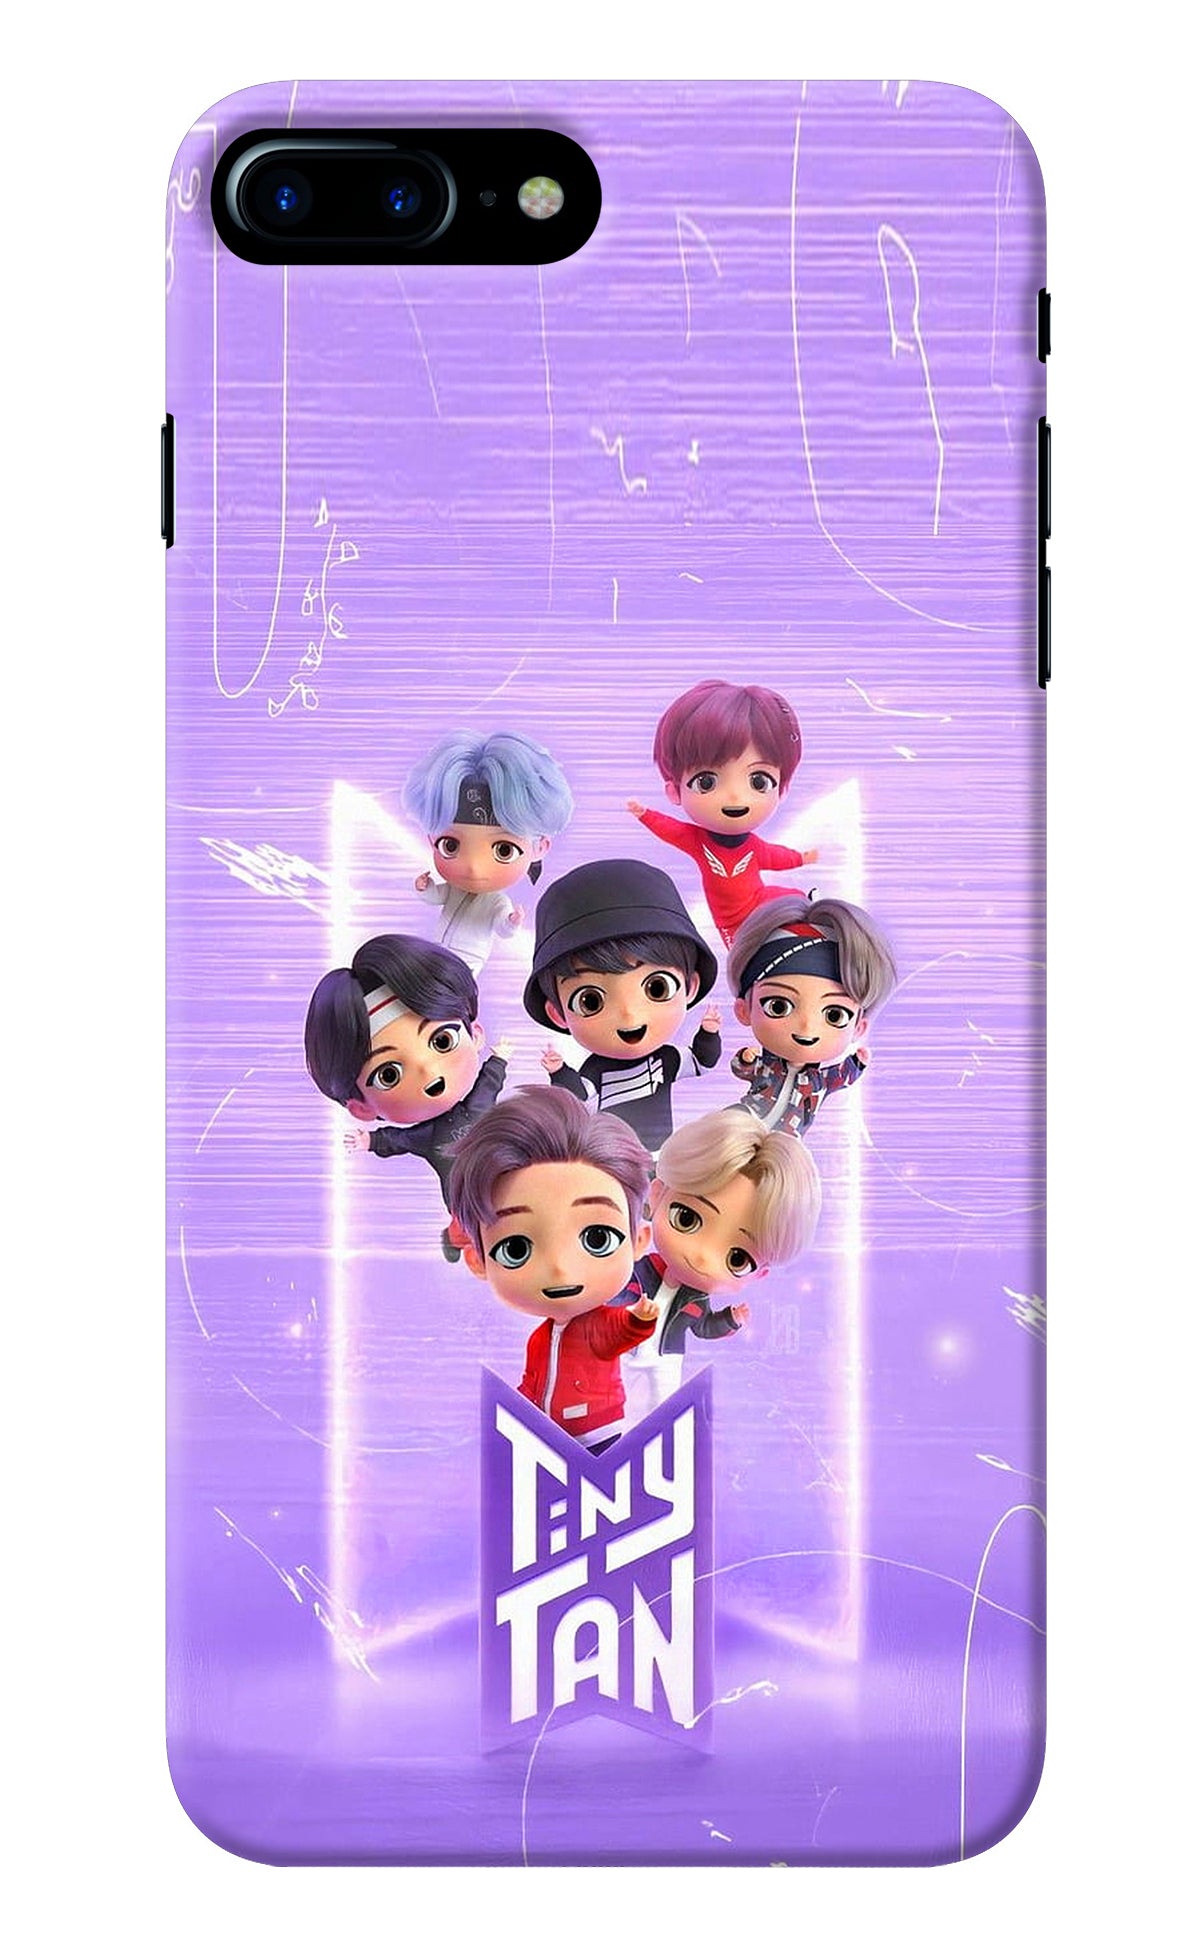 BTS Tiny Tan iPhone 7 Plus Back Cover